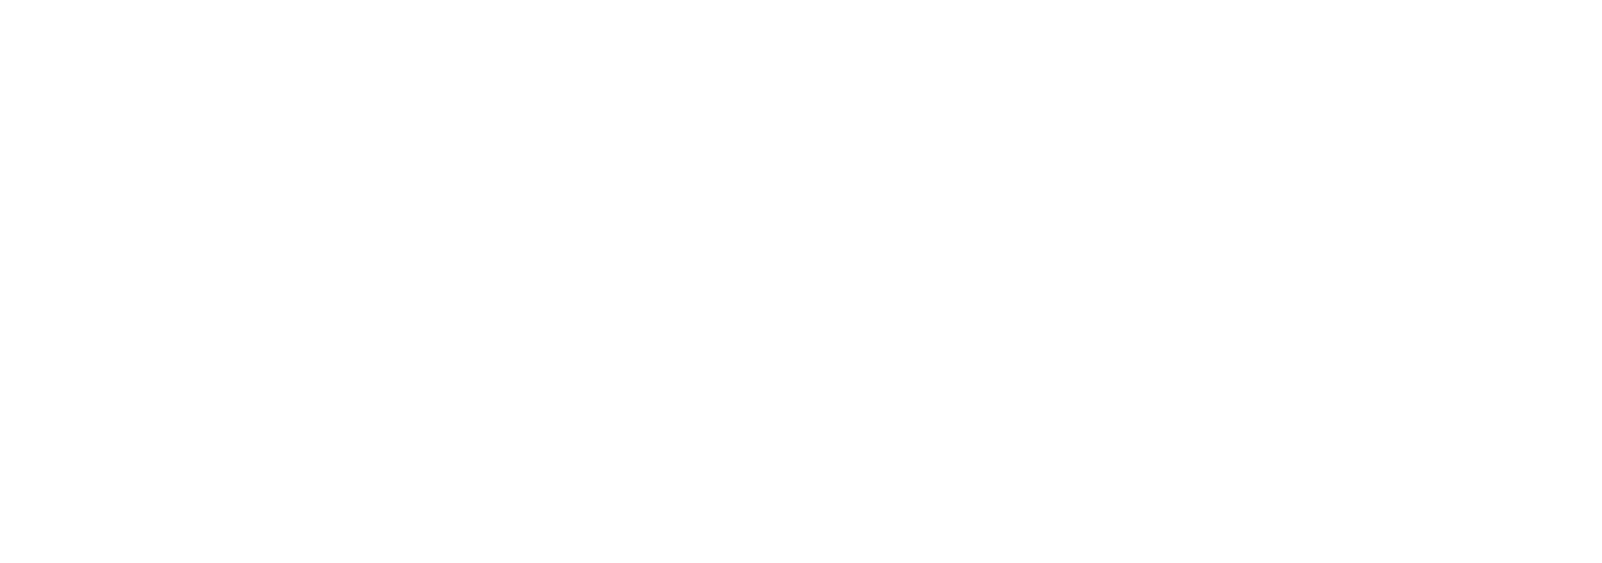 Logo Cross Global Event blanc